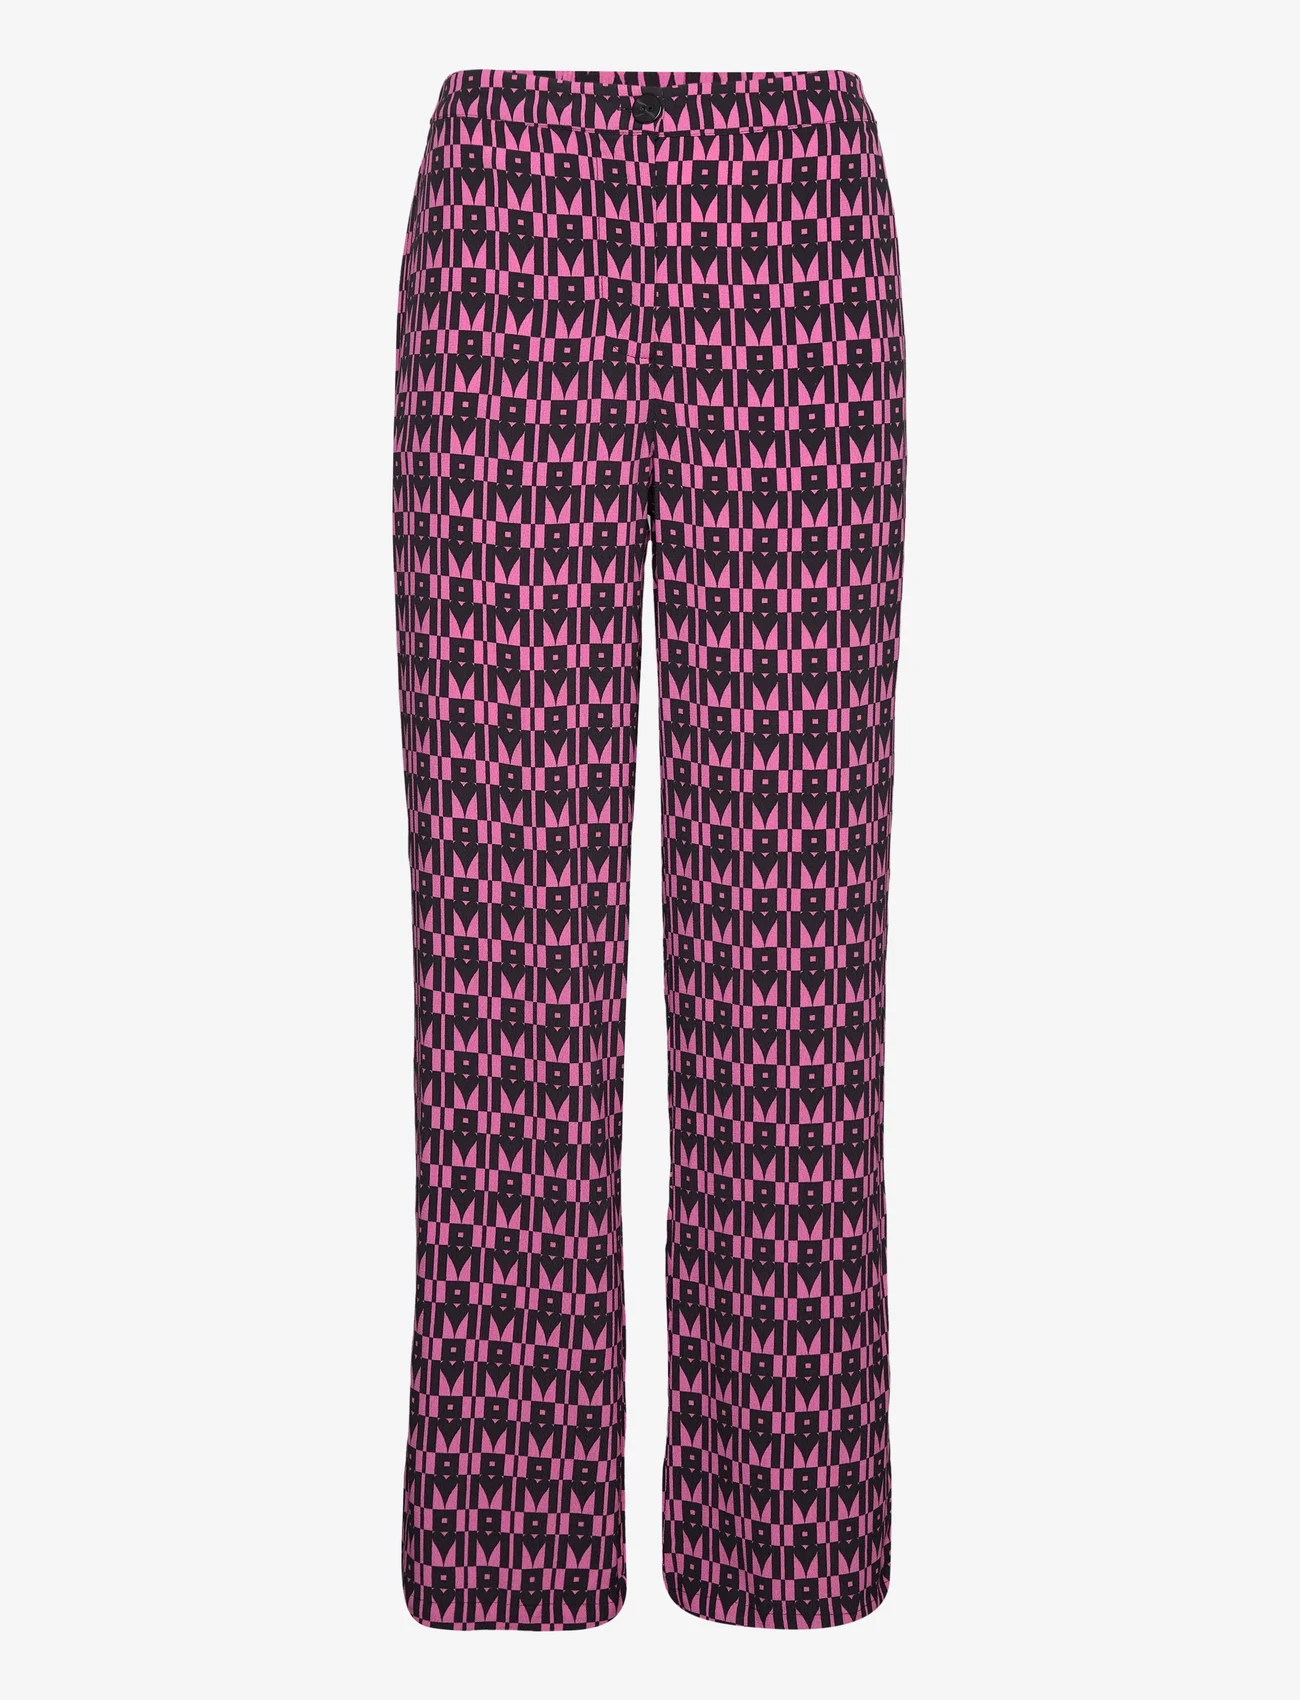 Modström - BorysMD print pants - broeken med straight ben - graphic heart cosmos pink - 0